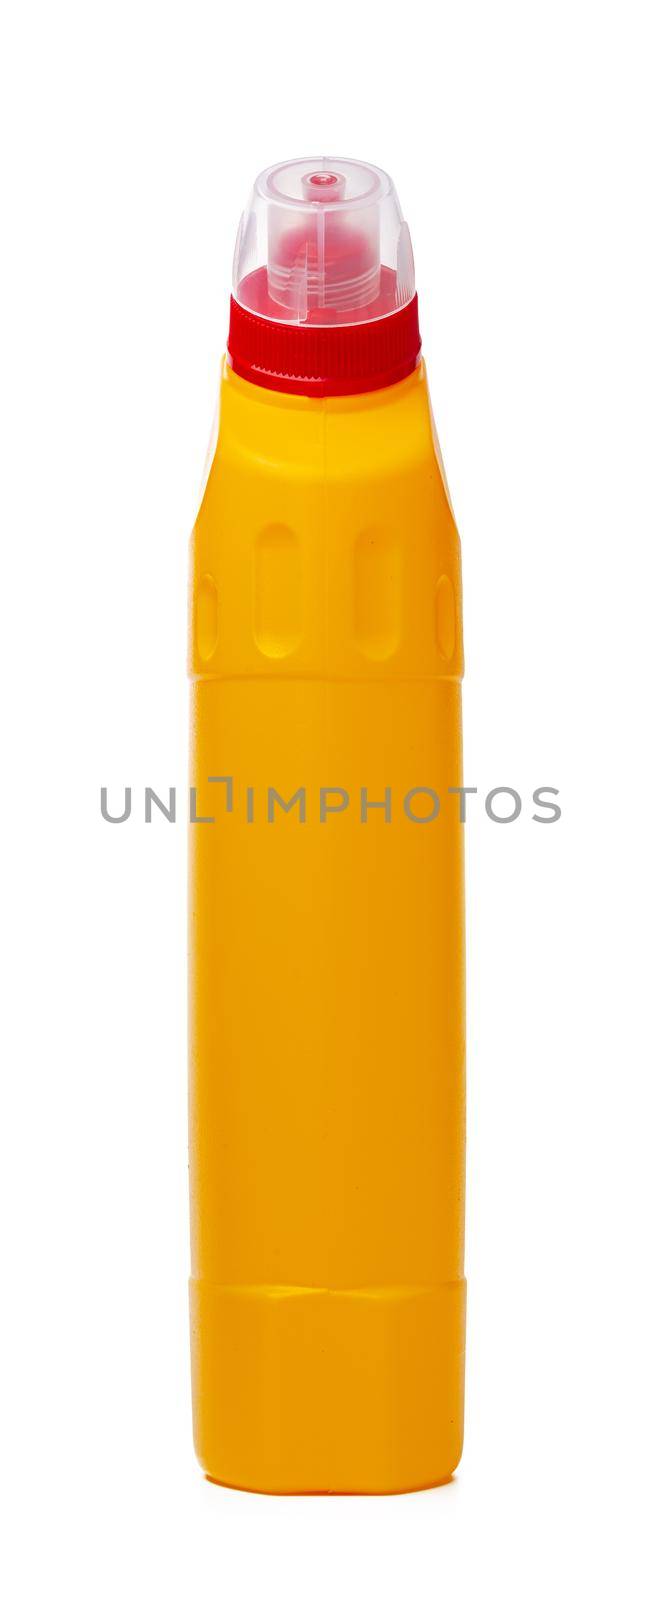 Orange plastic bottle of liquid detergent isolated on white background